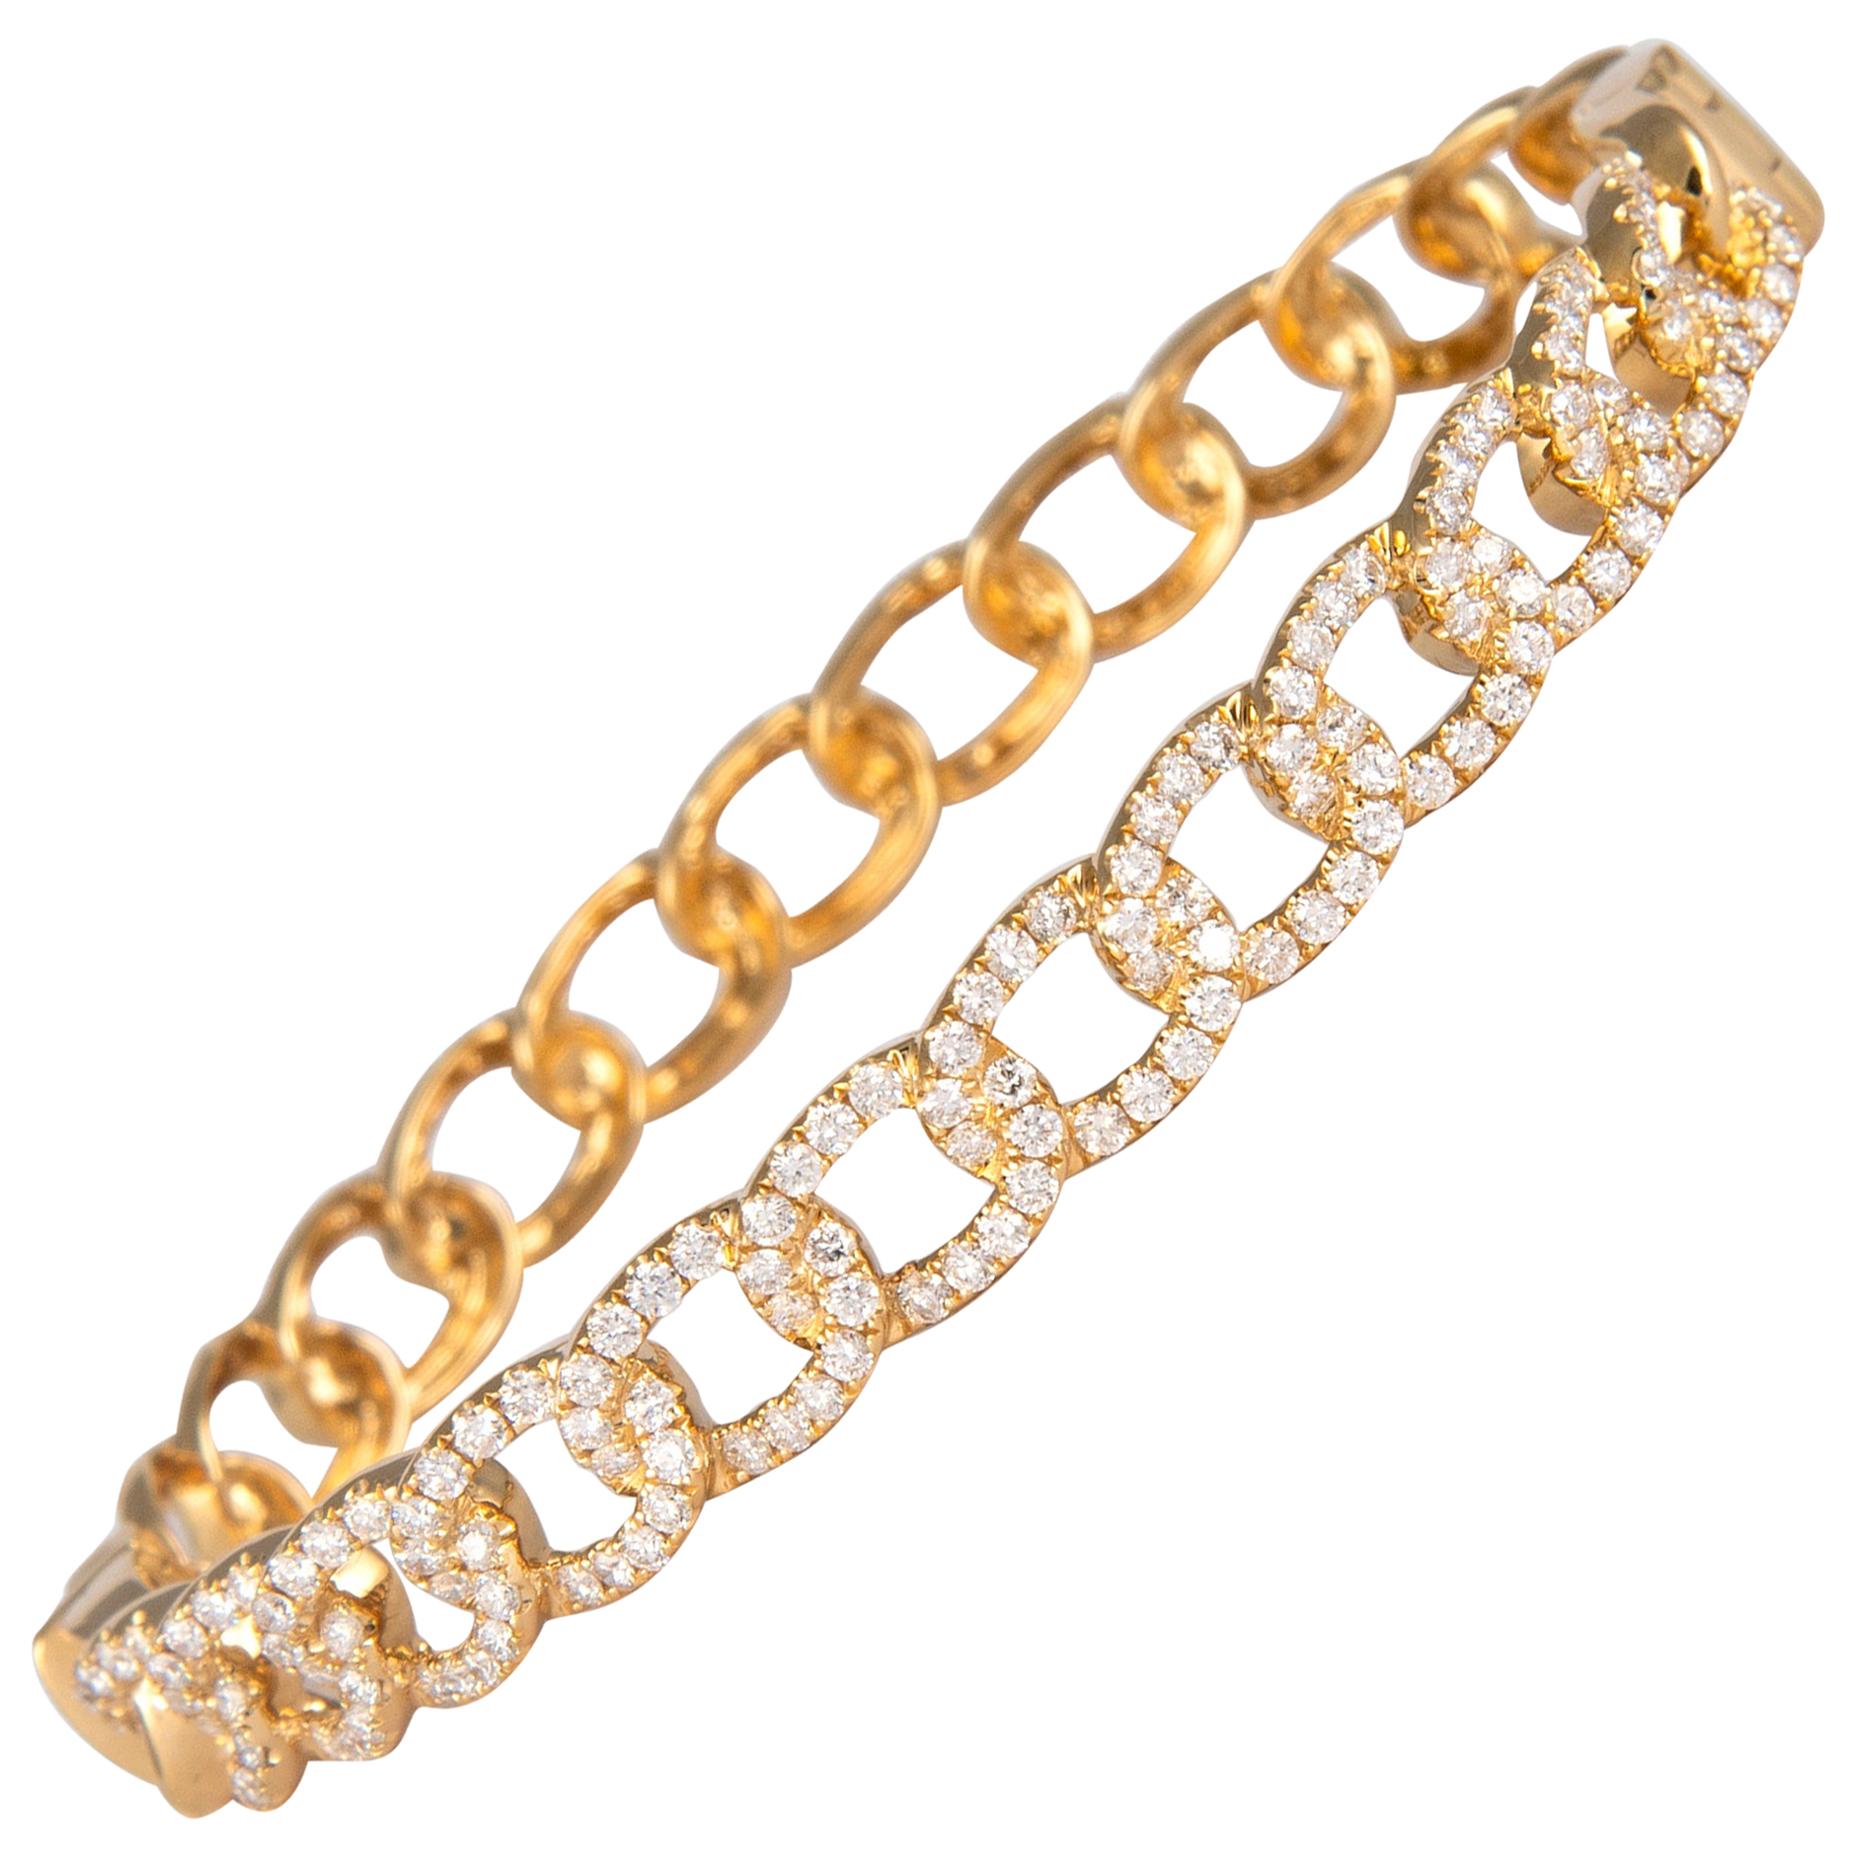 Gold Tone Metal Diamond Pattern fine Mesh Chain Link Bracelet Unique Designer Old Worn Bright Geometric Bright Yellow Estate Women\u2019s Jewelry